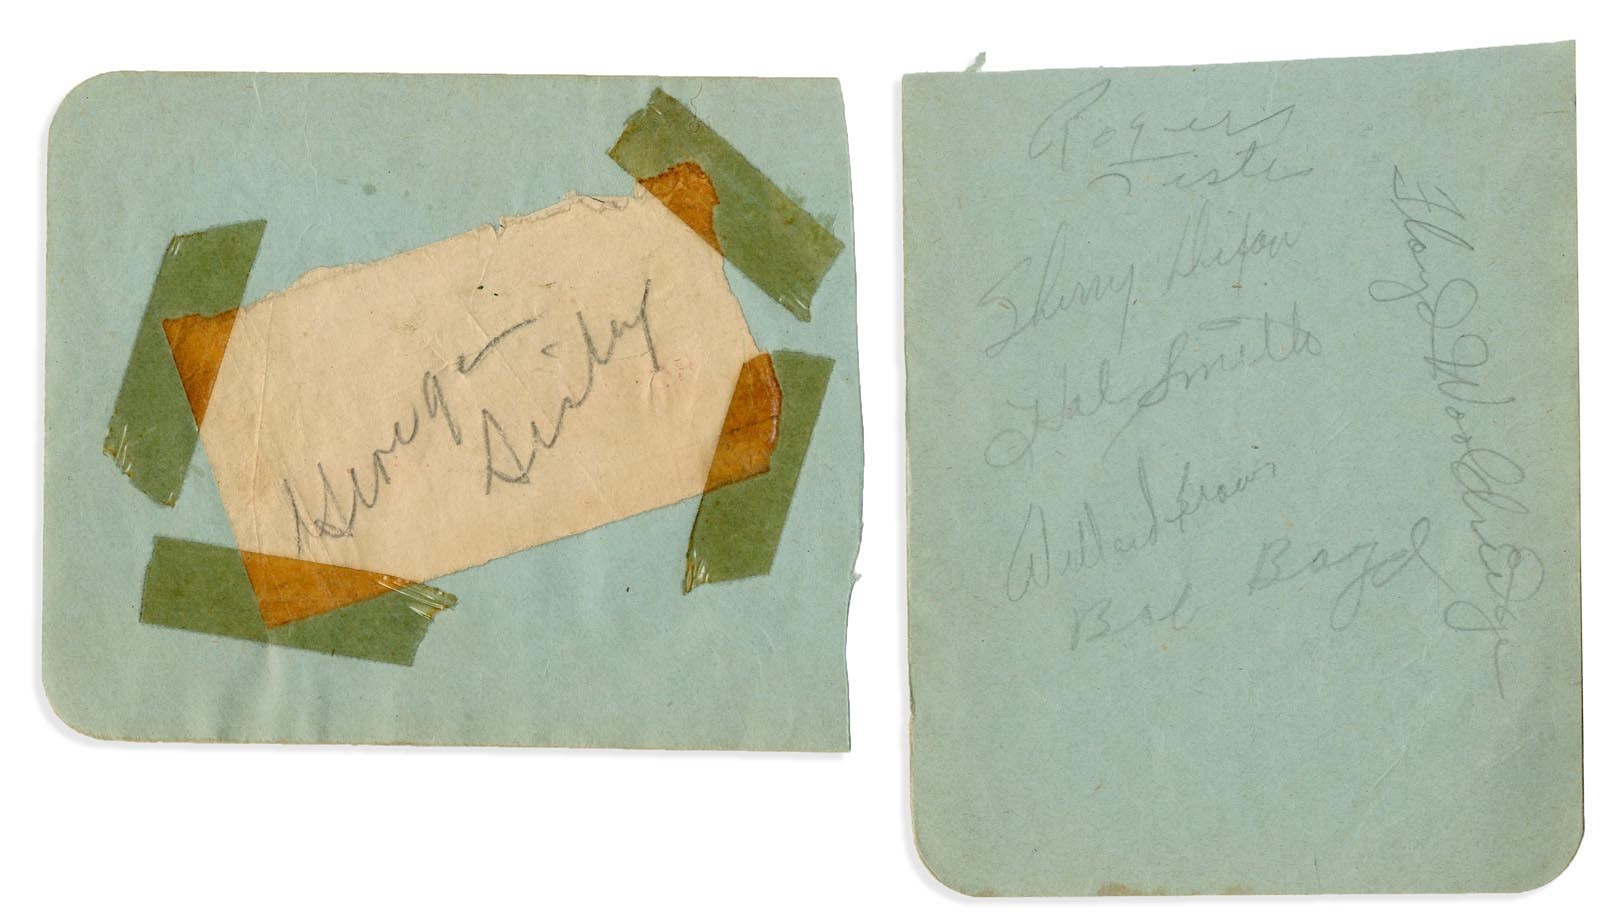 Baseball Autographs - Willard Brown and George Sisler Autographs